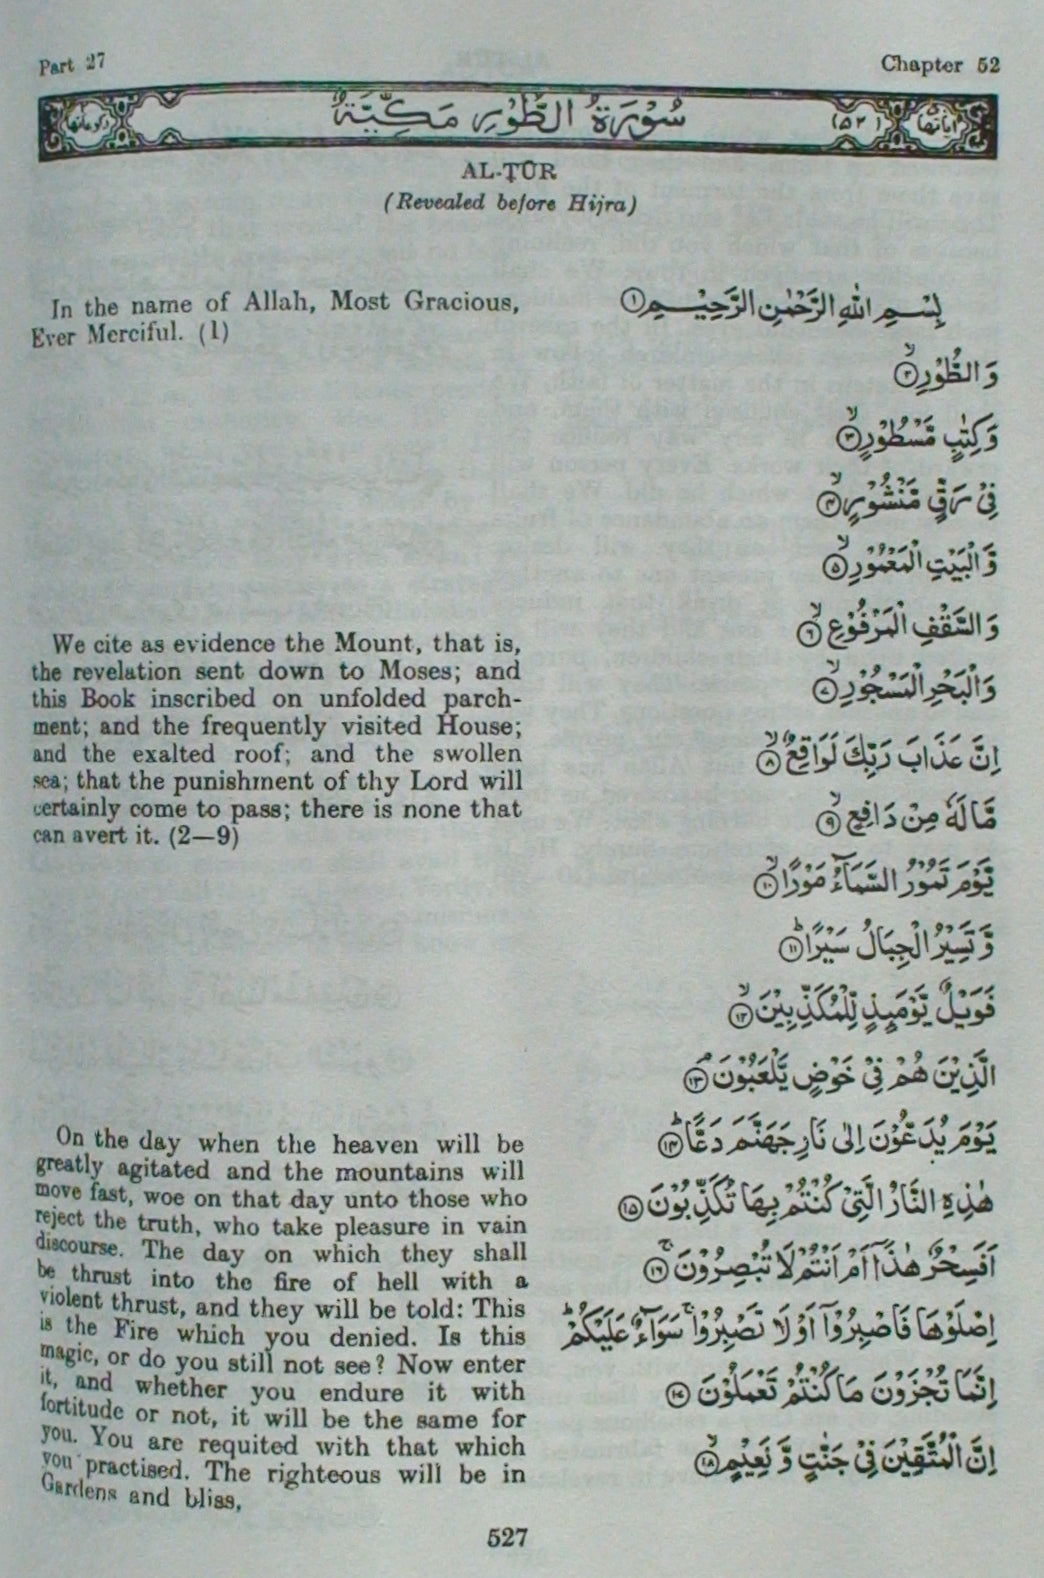 Holy Quran with English translation by Ch. Zafrulla Khan